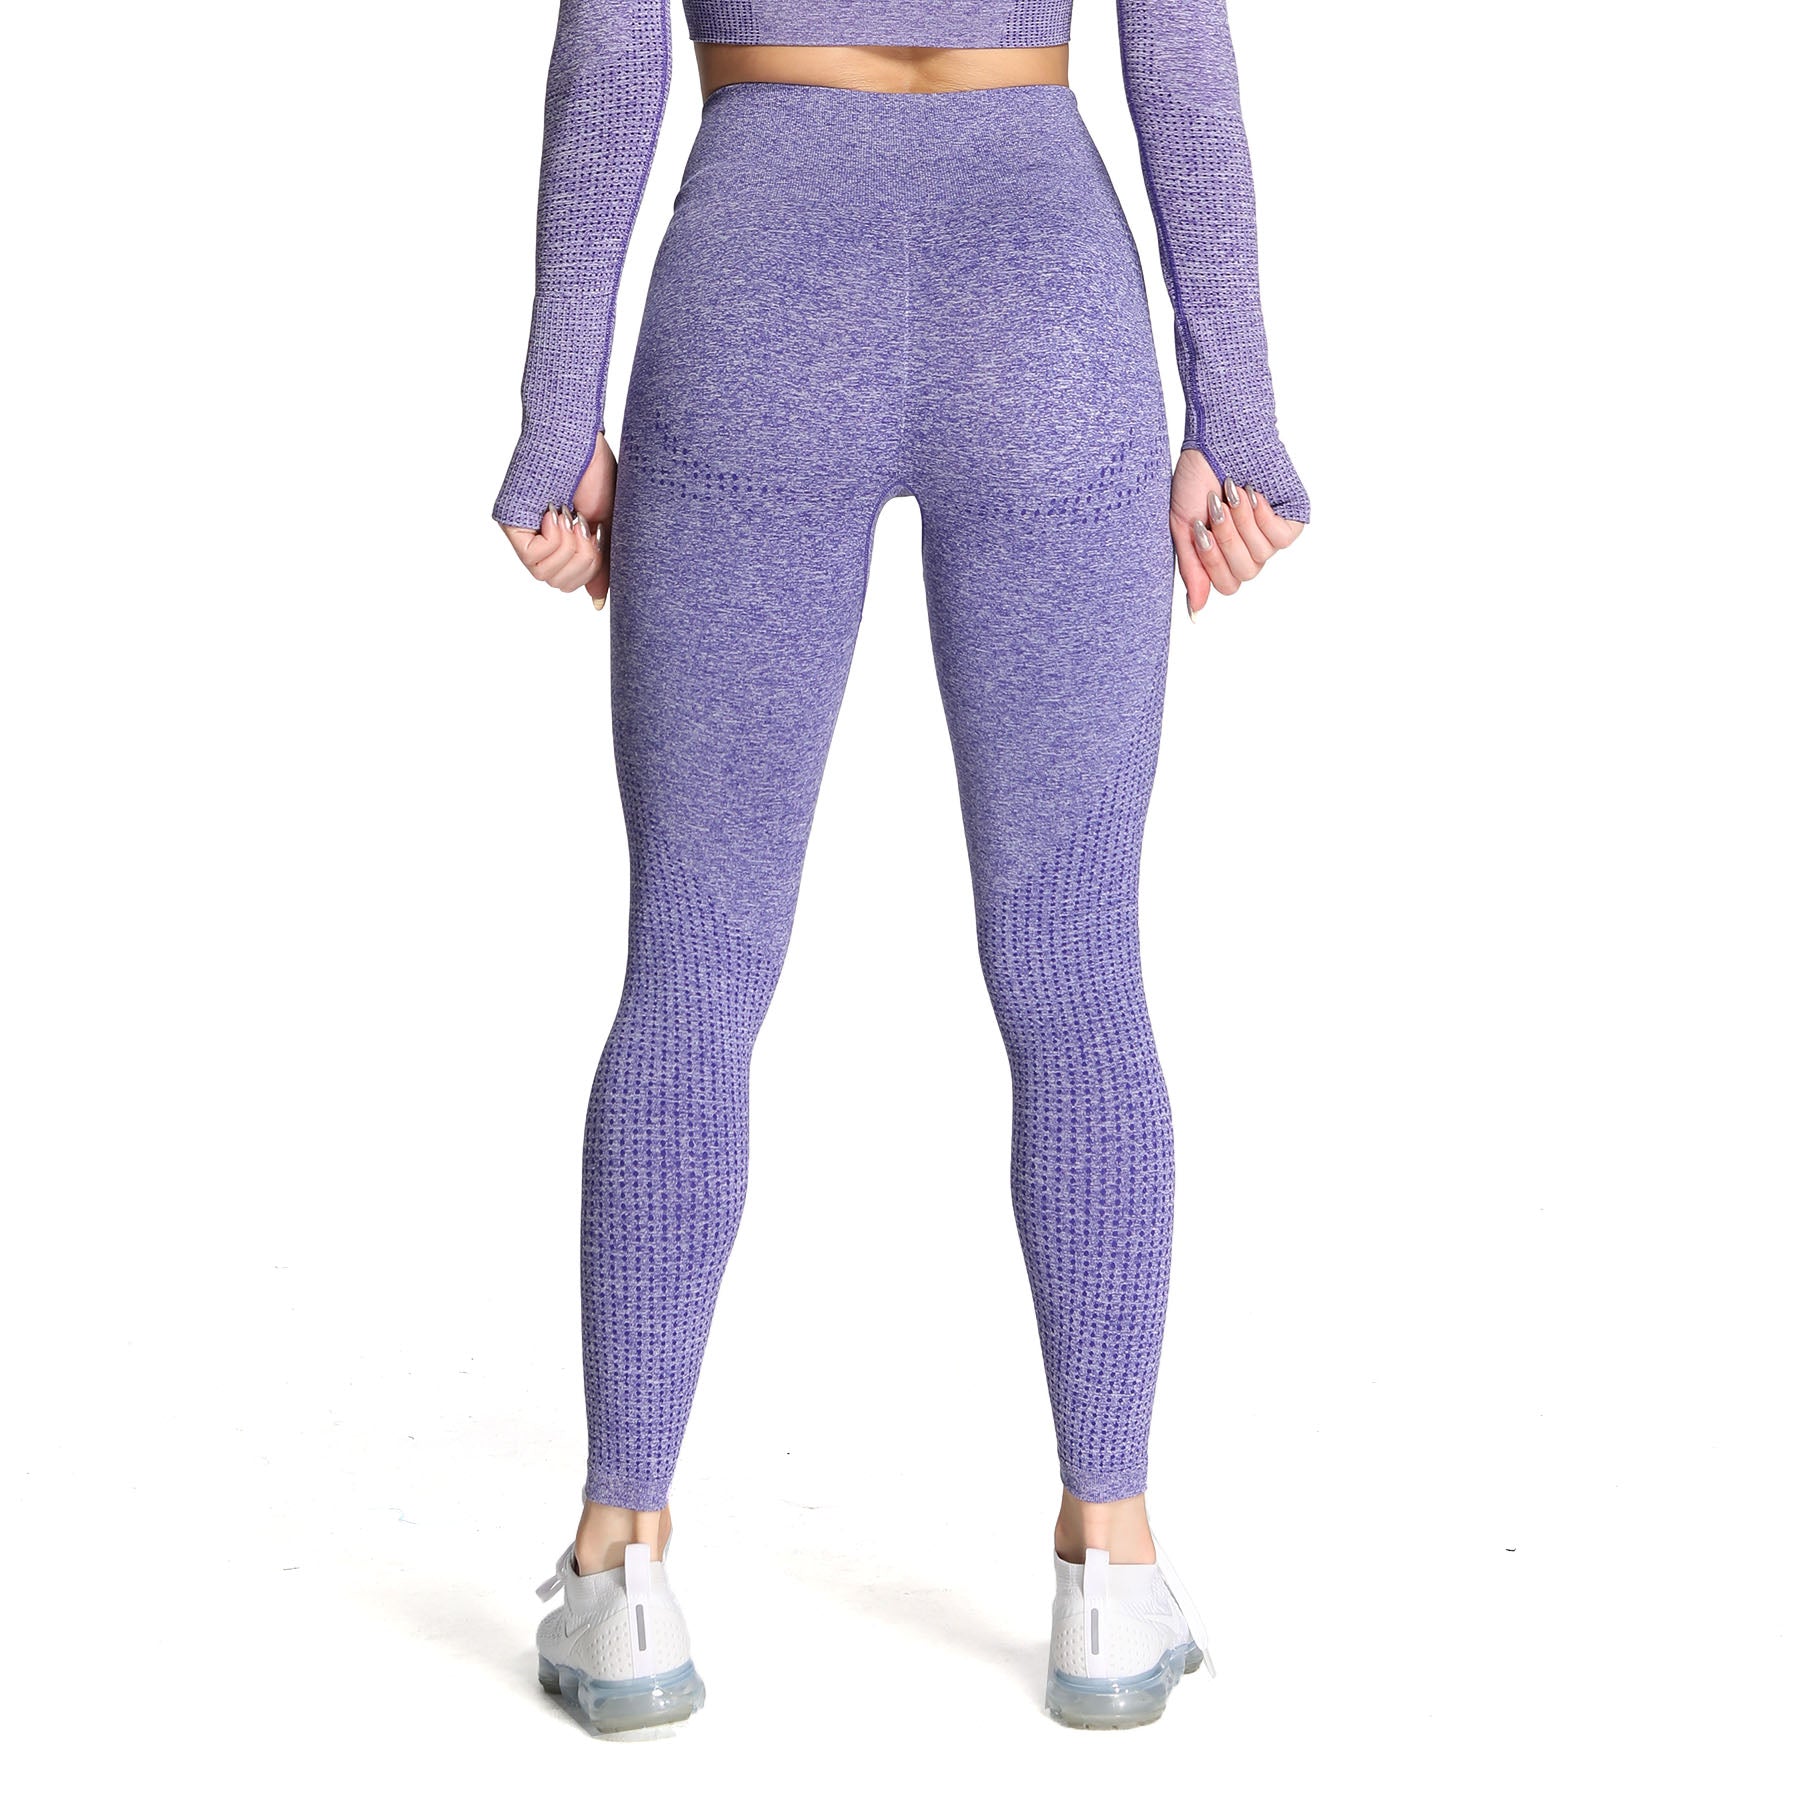 Petalum Women Yoga Pants High Waist Cotton Stretch Sports Gym